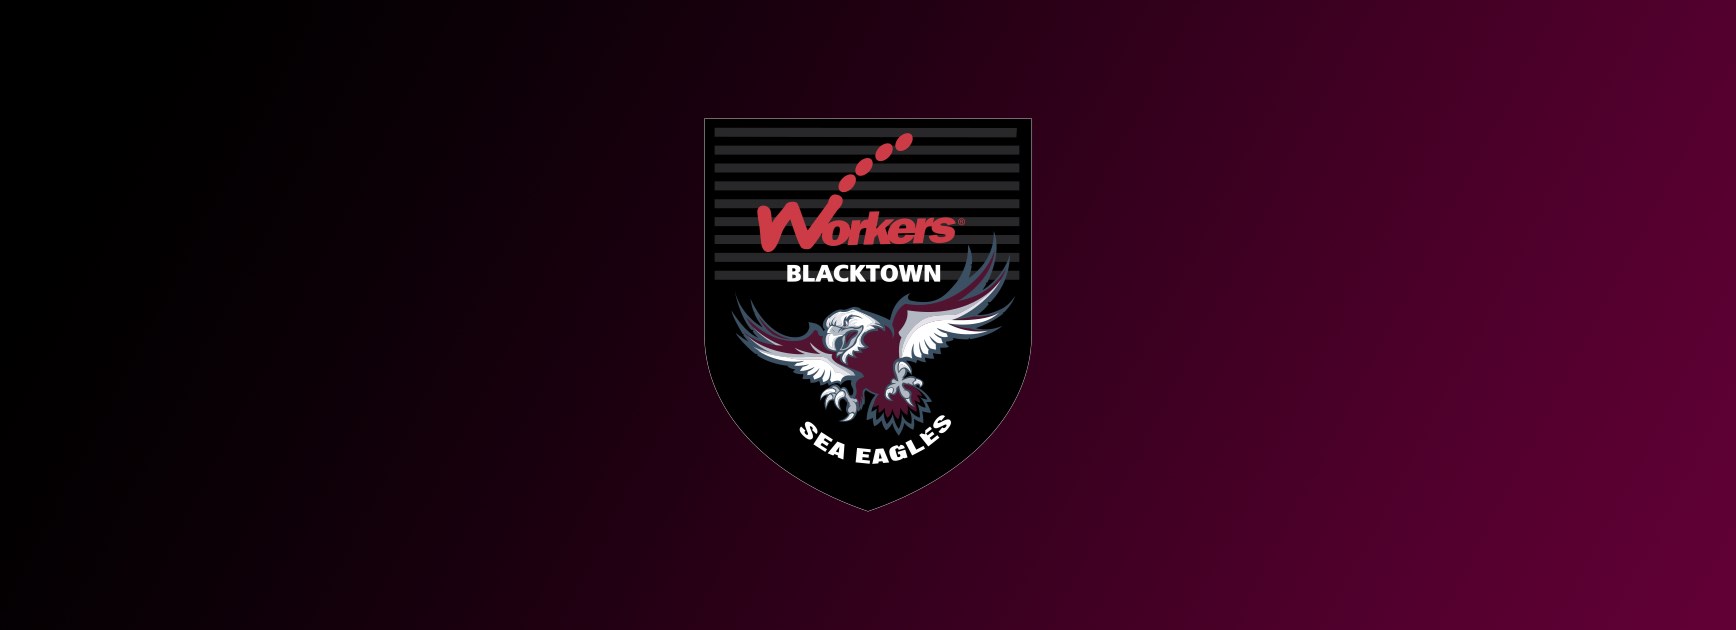 Blacktown Workers Sea Eagles team to play Wests